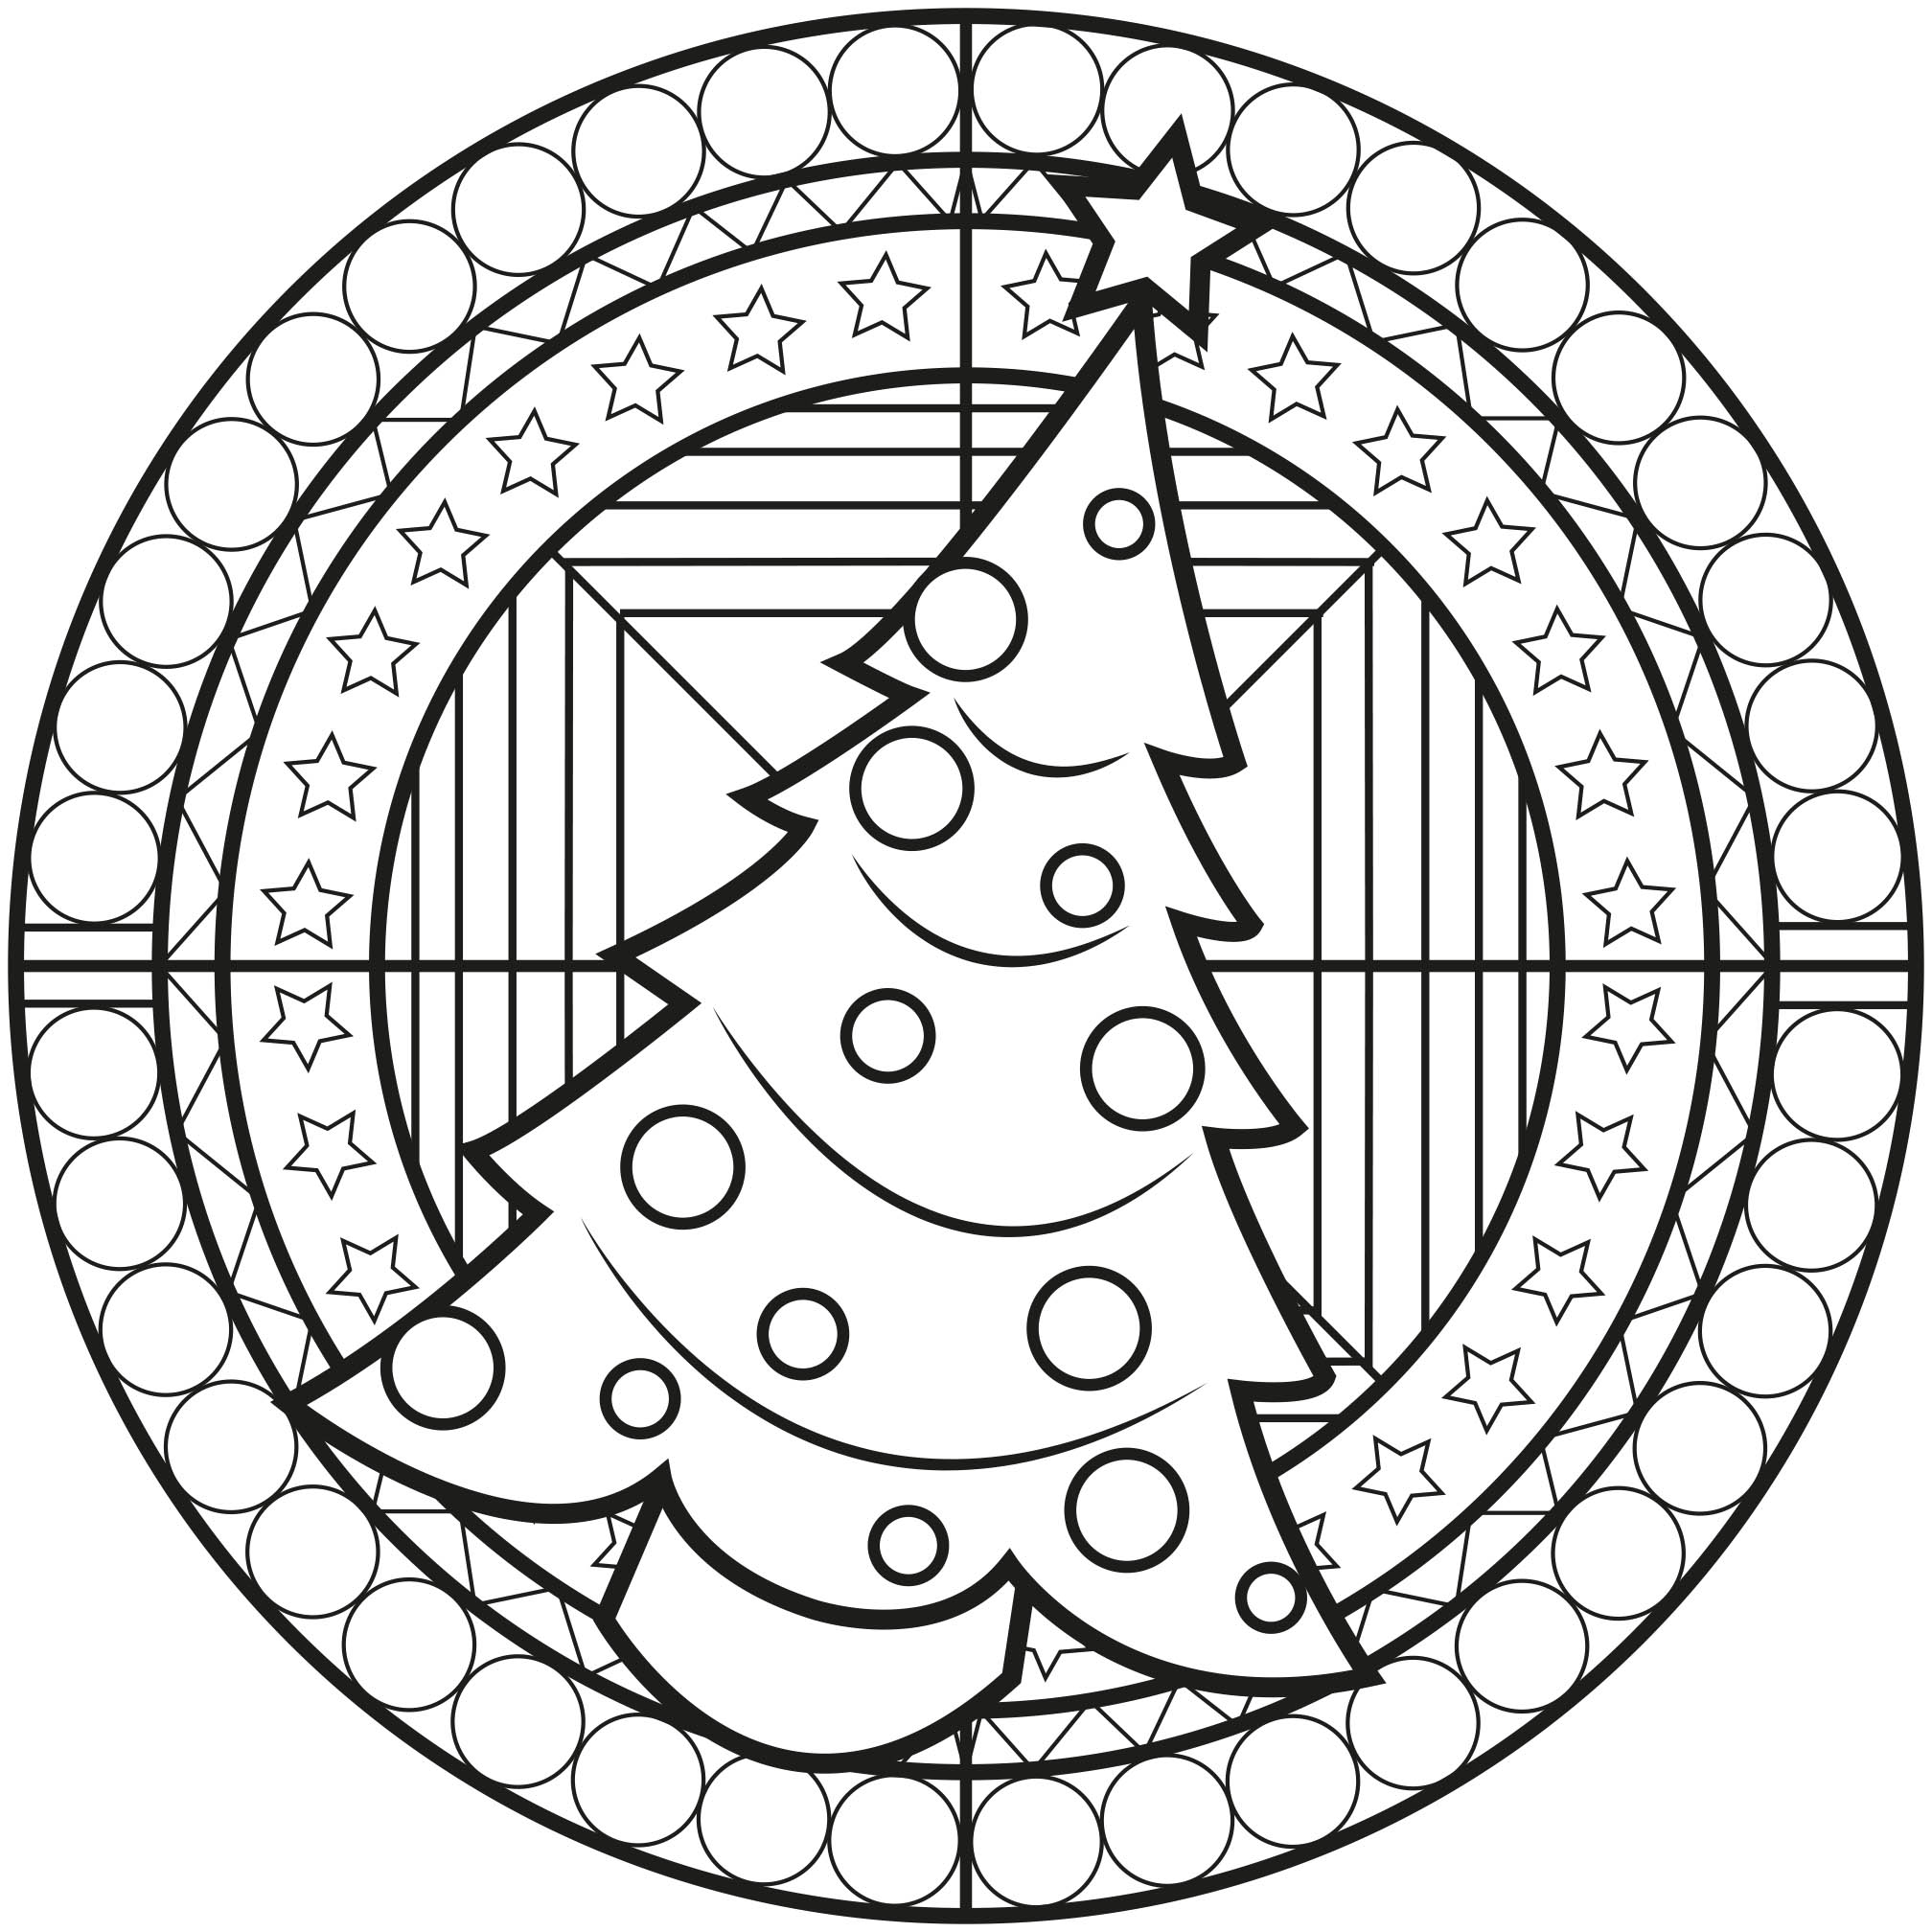 Chrstmas Mandala with a Christmas Tree - M&alas Adult ...